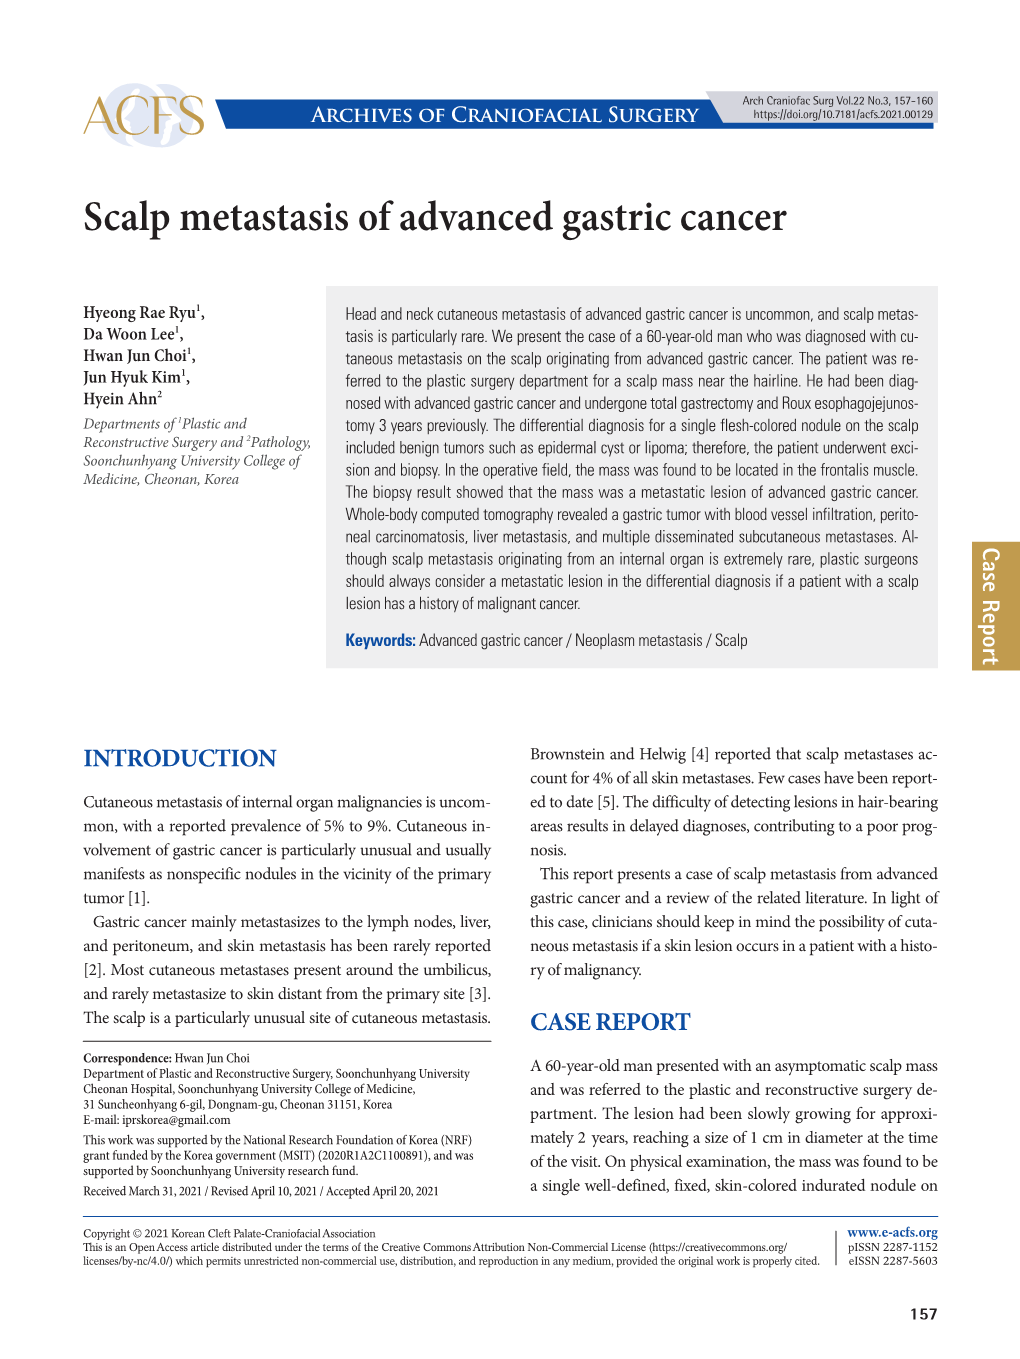 Scalp Metastasis of Advanced Gastric Cancer